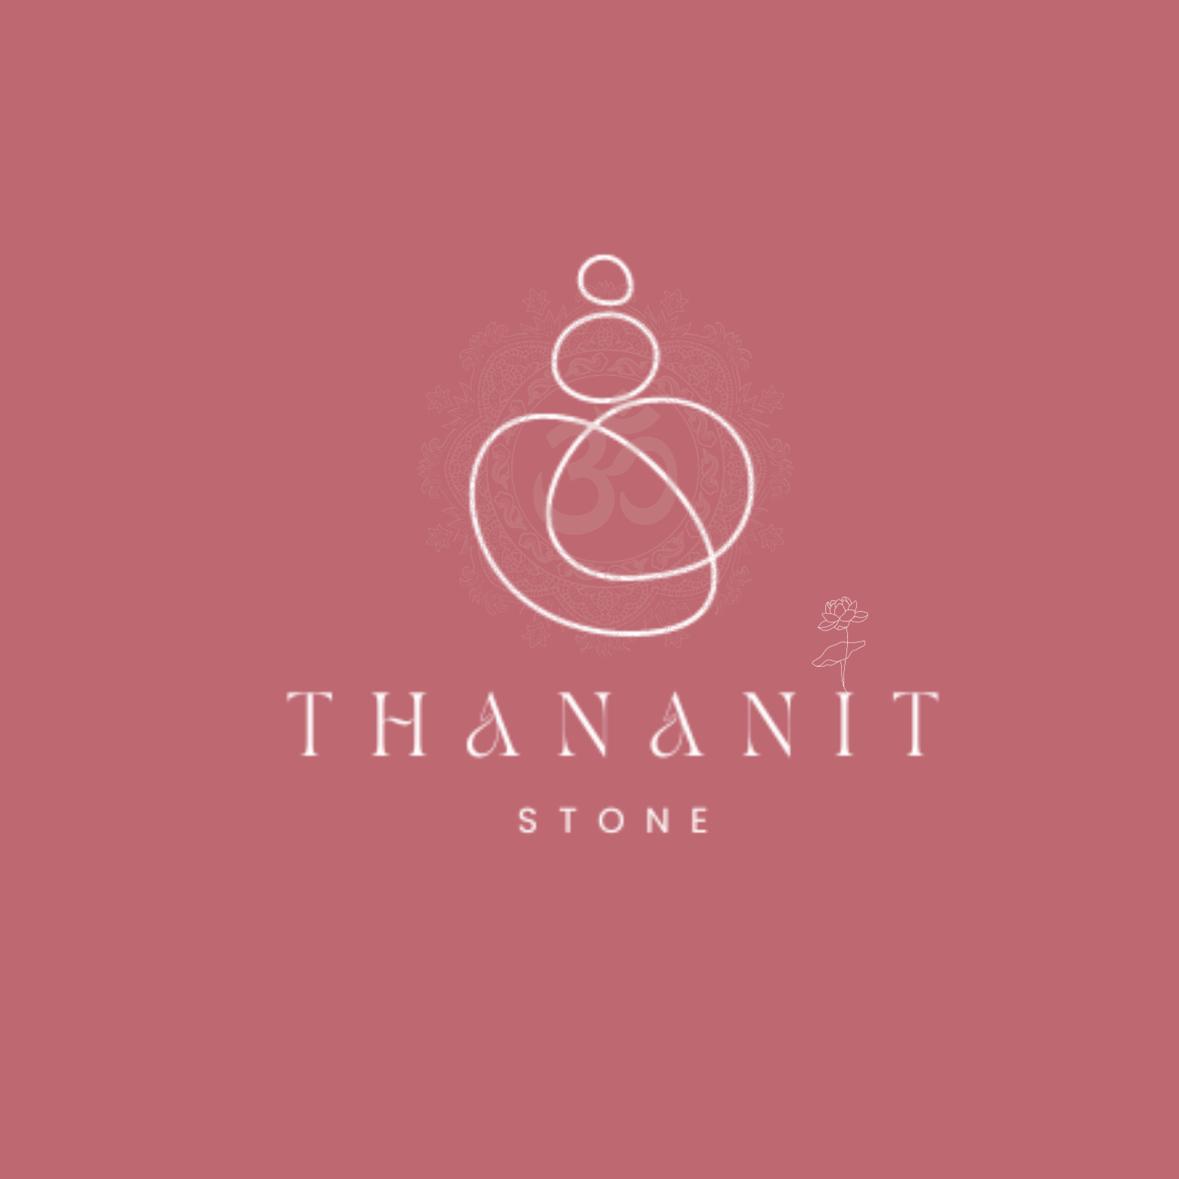 Thananit